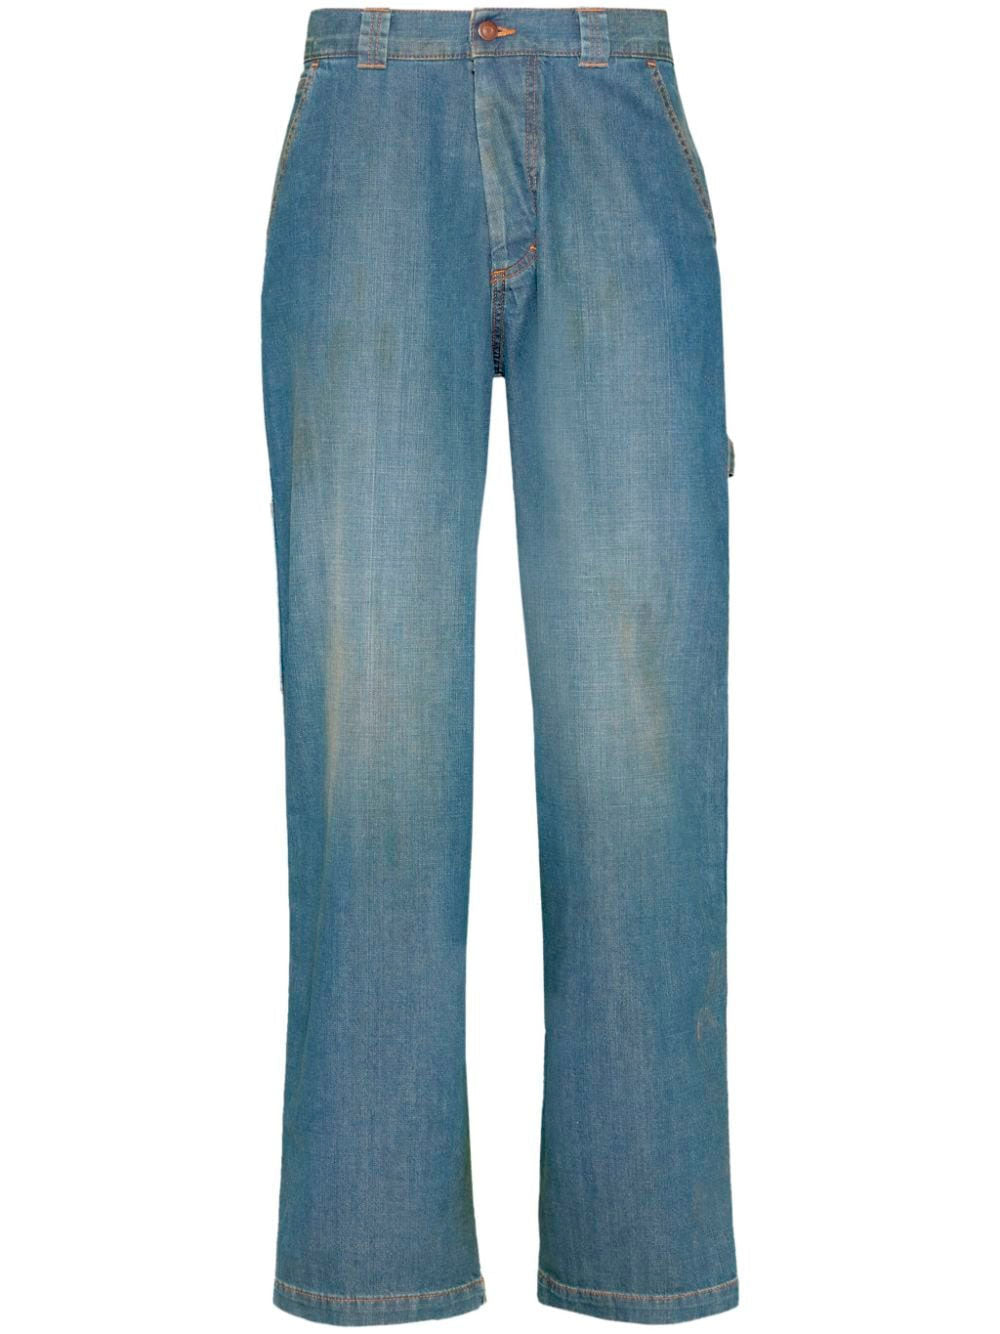 Americana wide-leg jeans